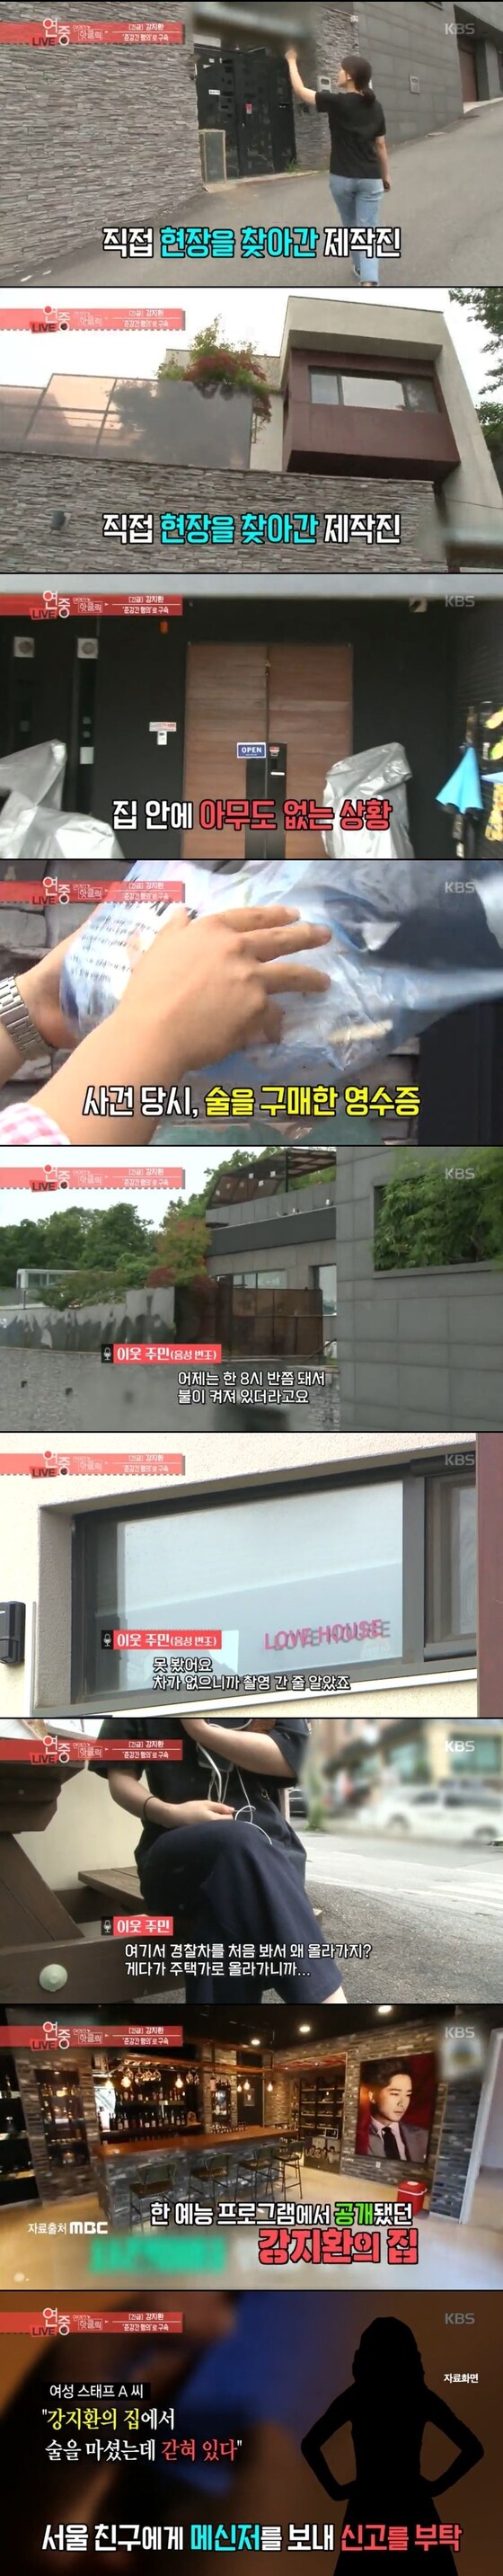 KBS 2TV 연예가중계 캡처 © 뉴스1